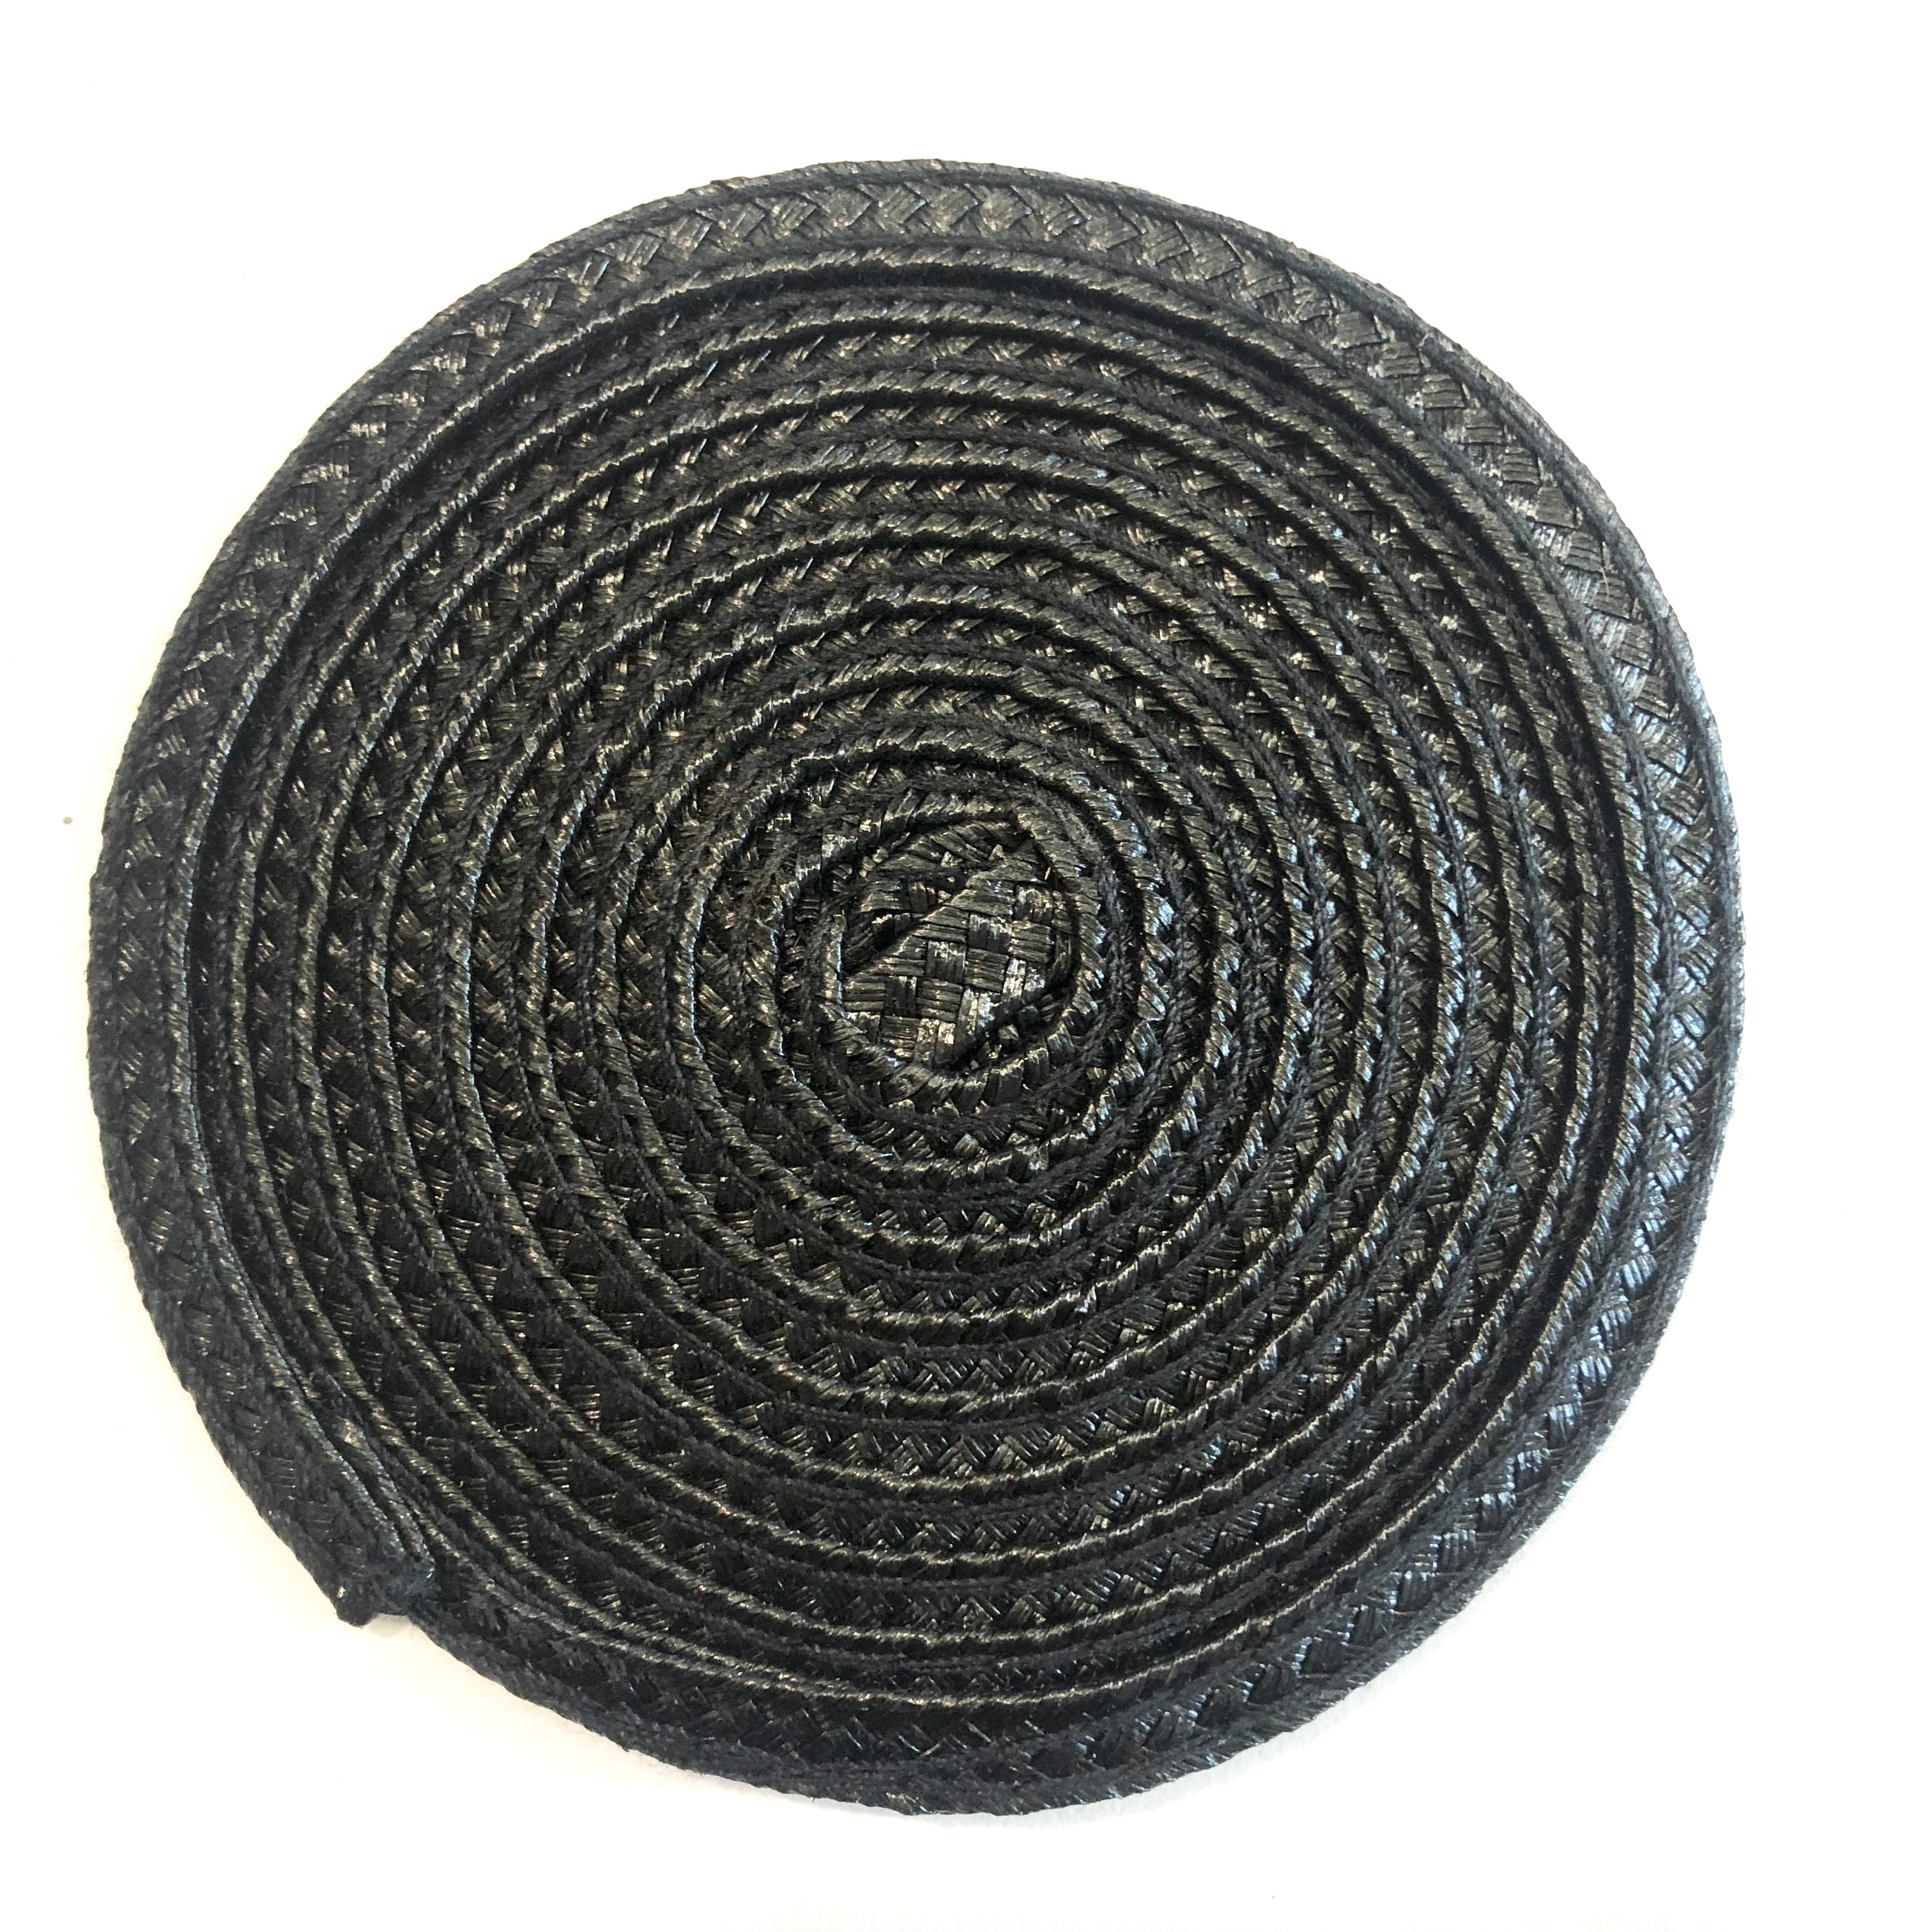 Polybraid 100mm Round Disc Millinery Fascinator Base x 10 pcs - Black